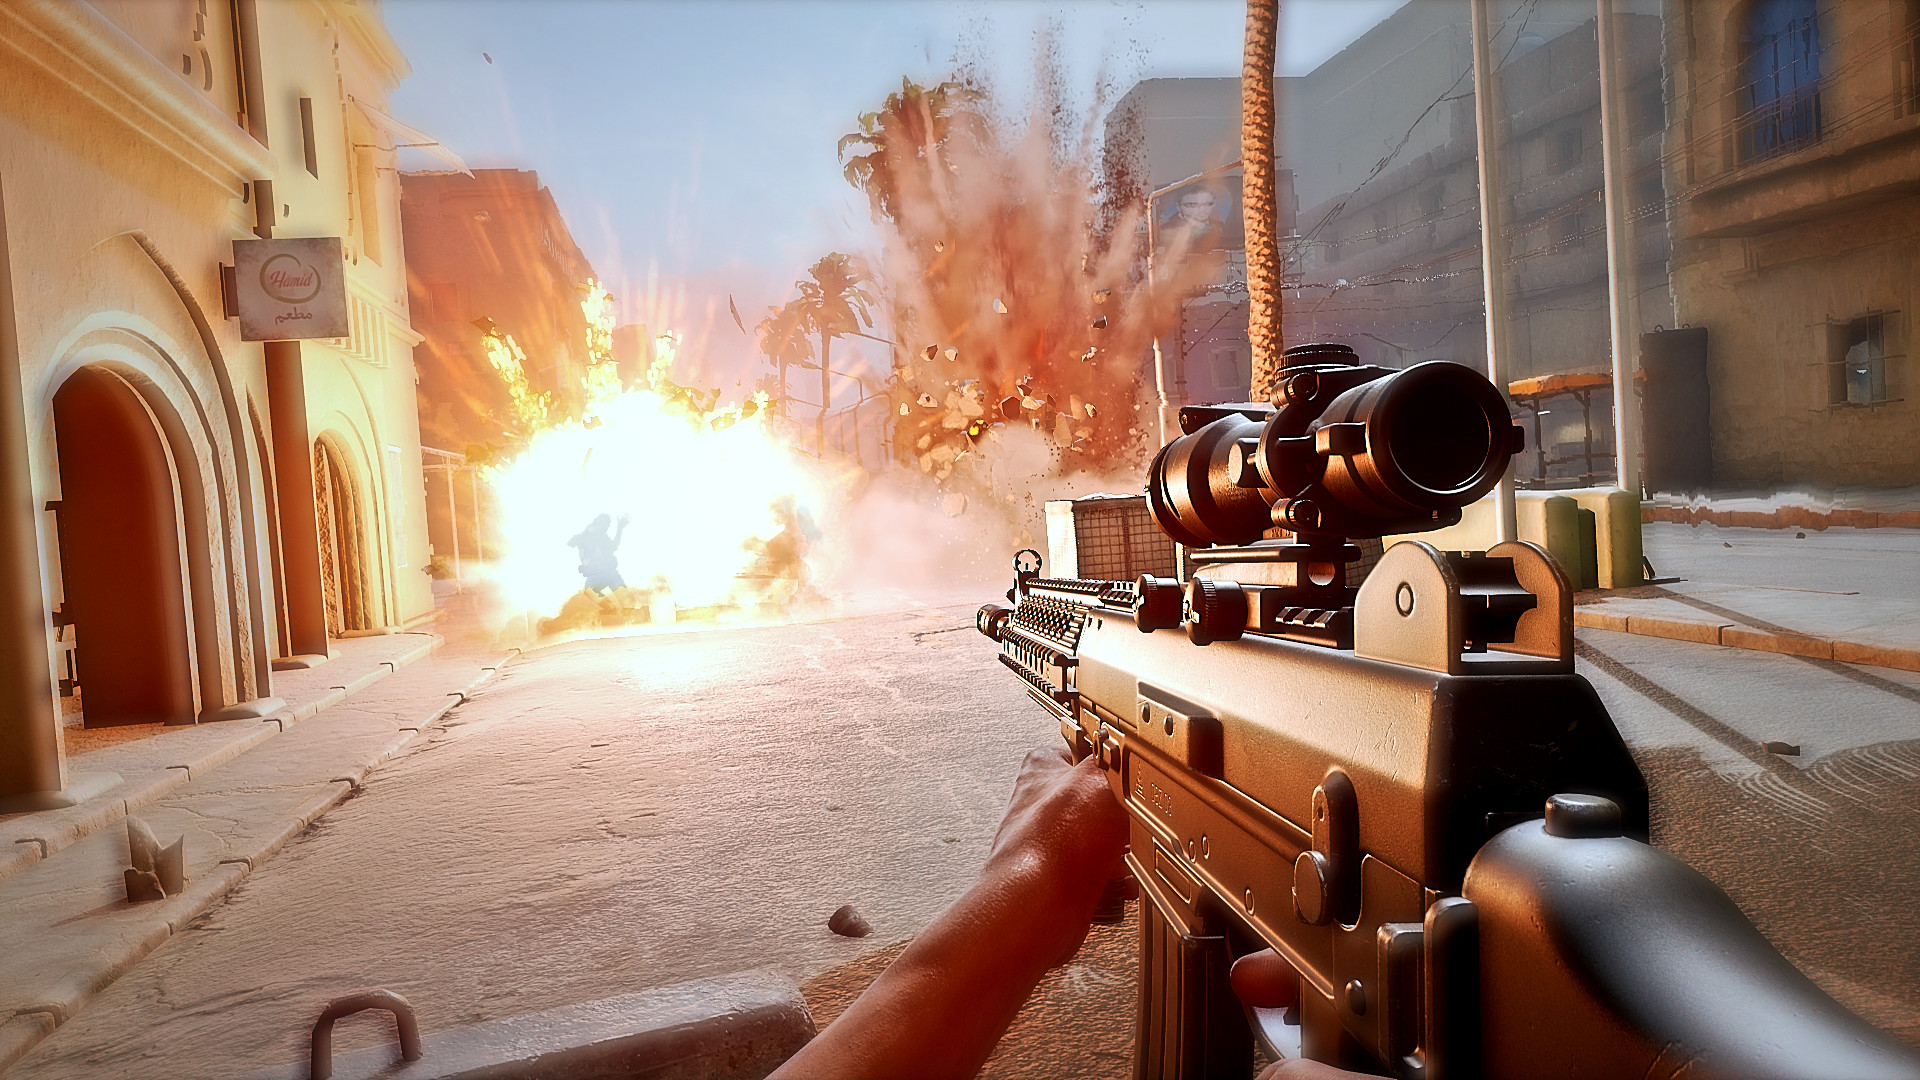 insurgency sandstorm gameplay